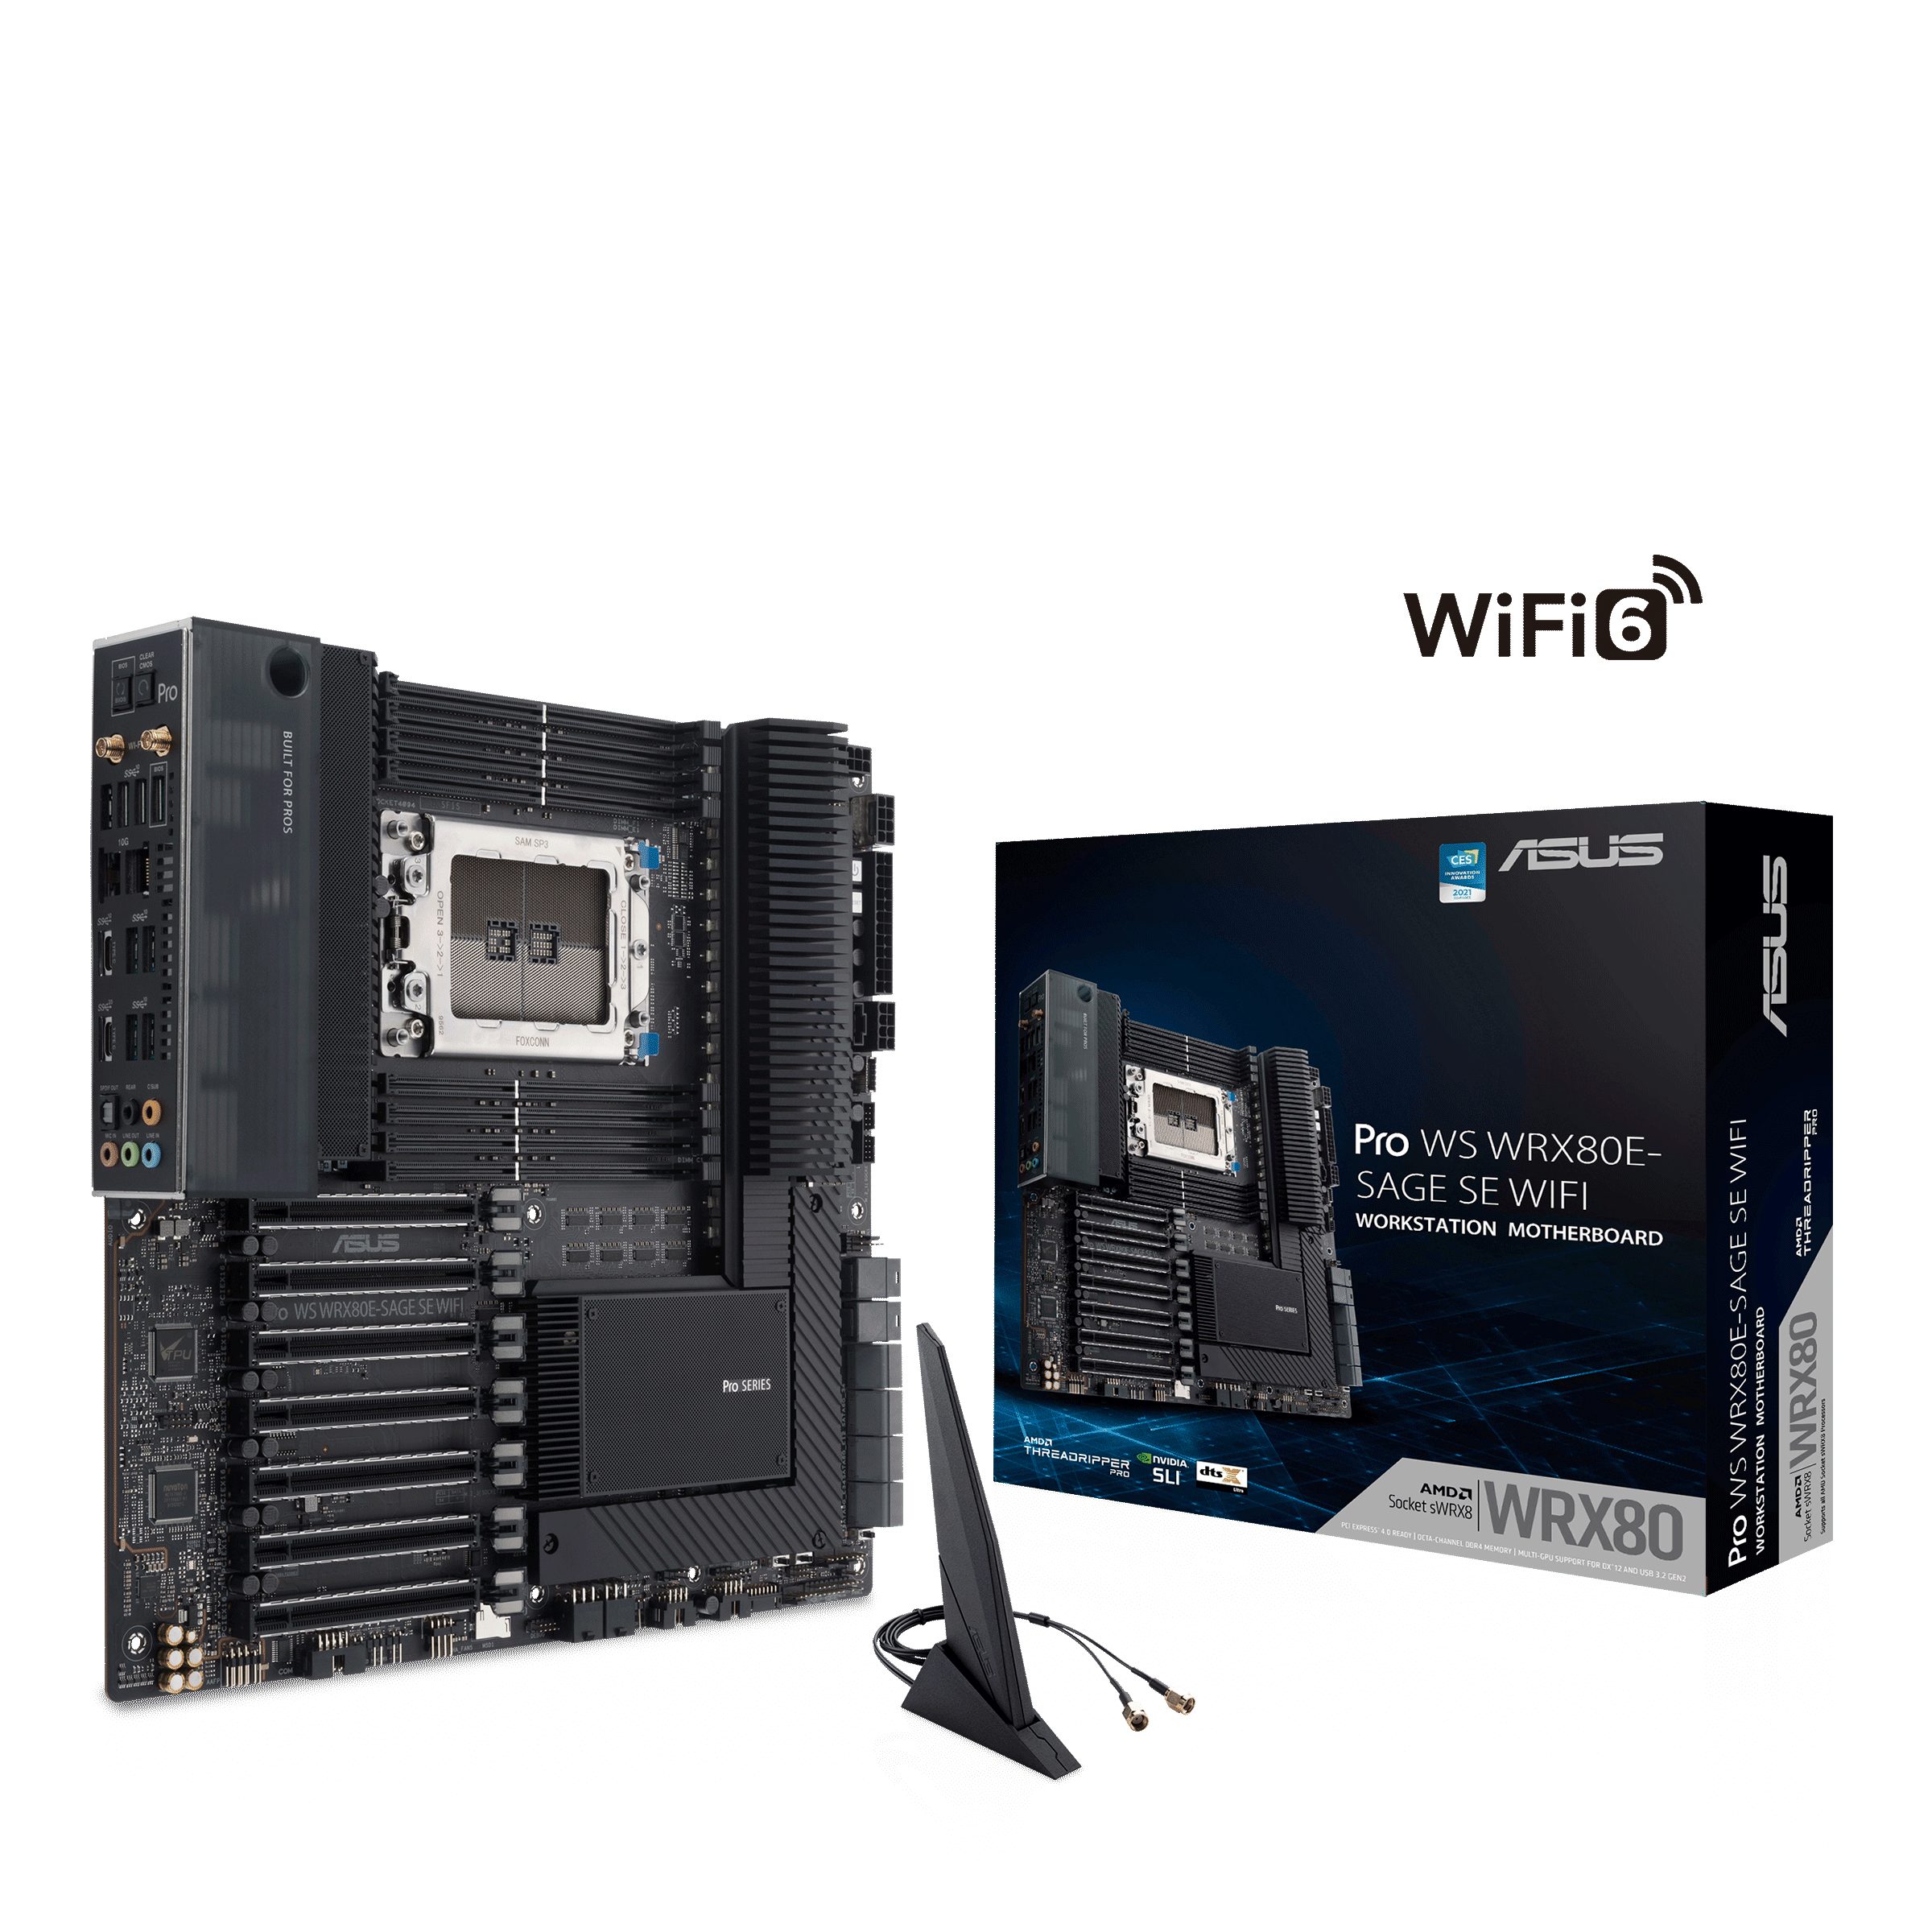 Asus PRO WS WRX80E-SAGE SE WIFI Mainboard